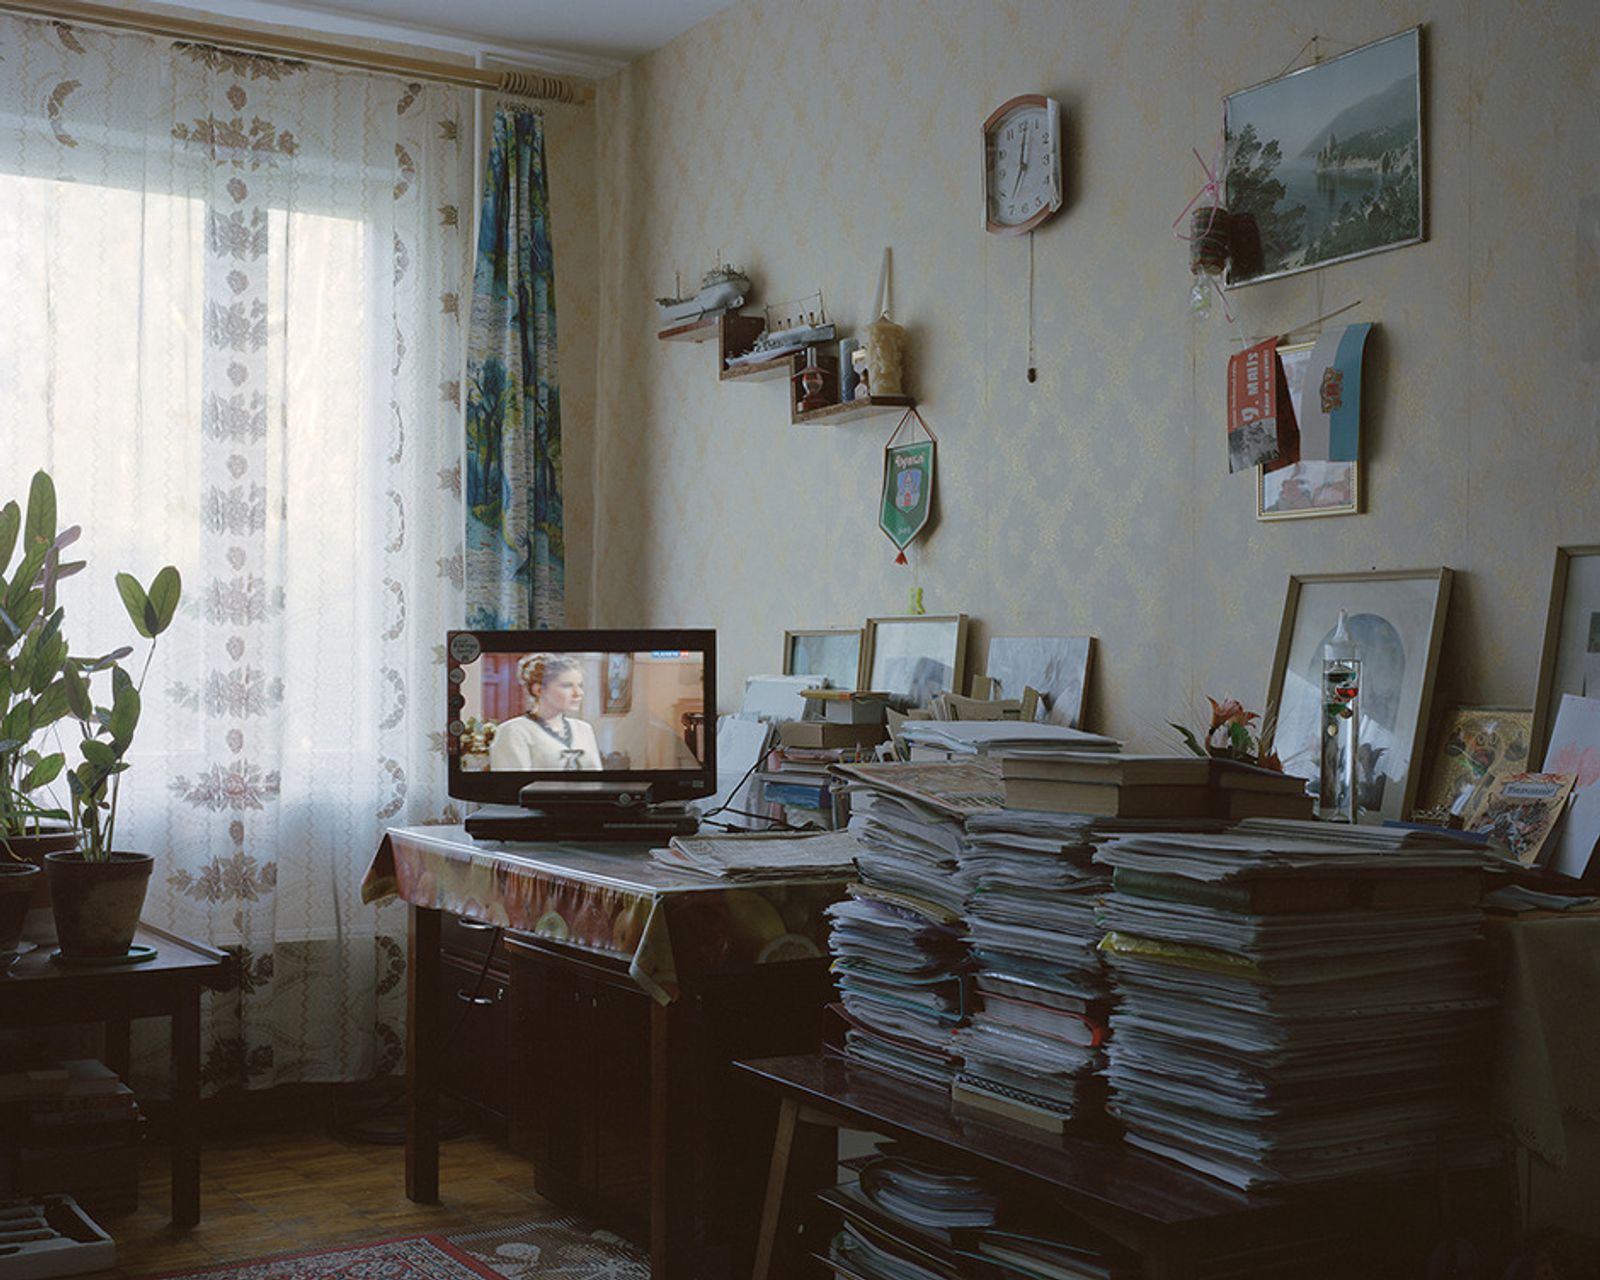 © Andrejs Strokins - Apartment in Daugavgrīva, 2012